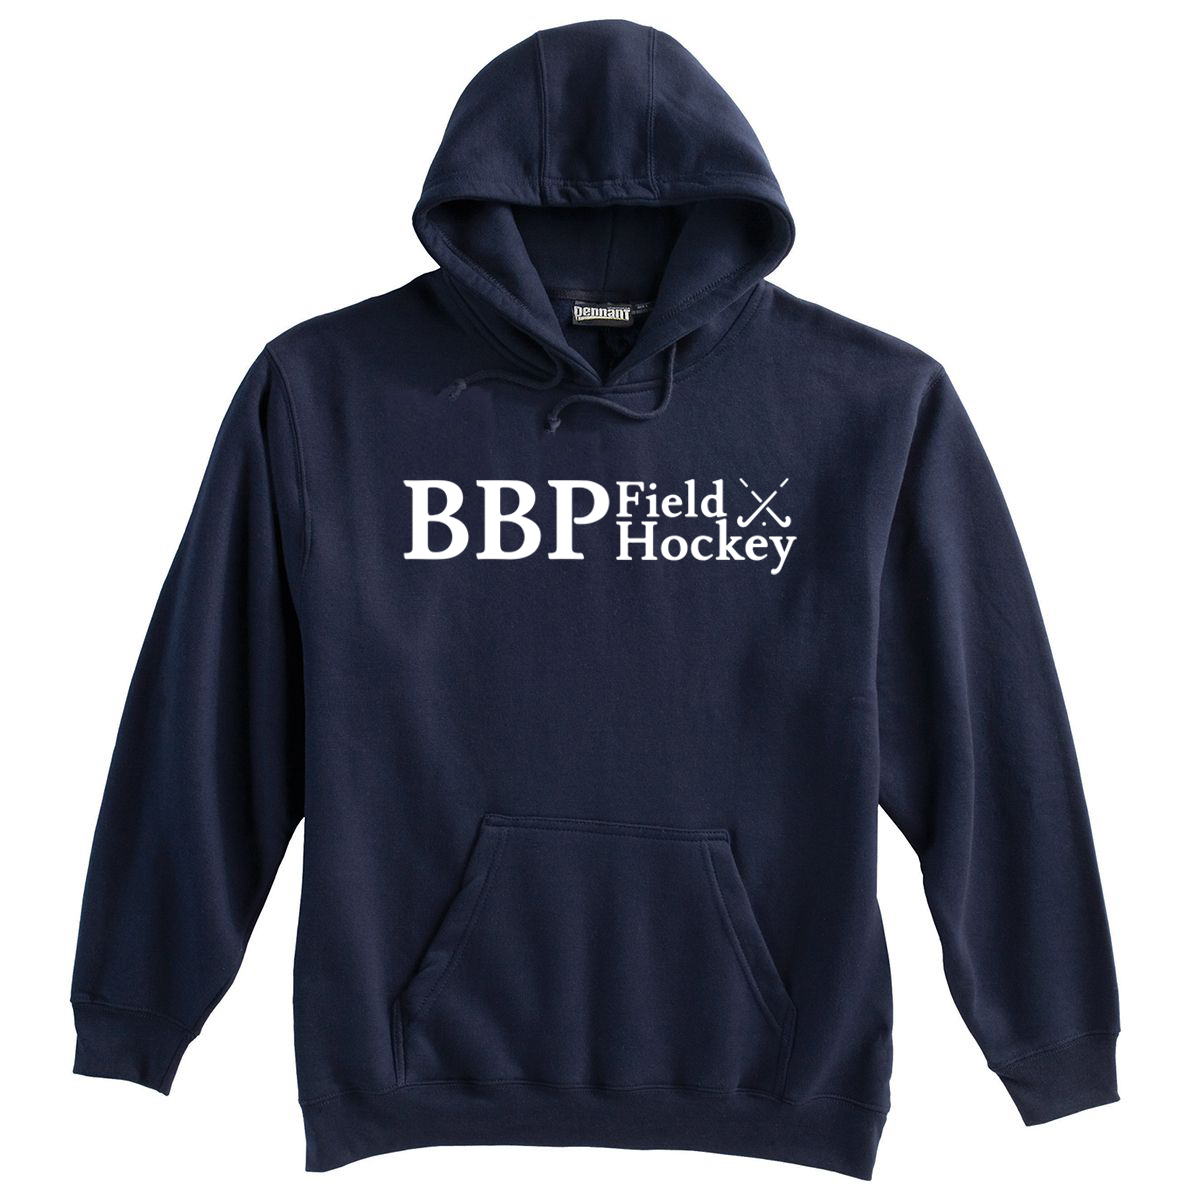 BBP Field Hockey Sweatshirt